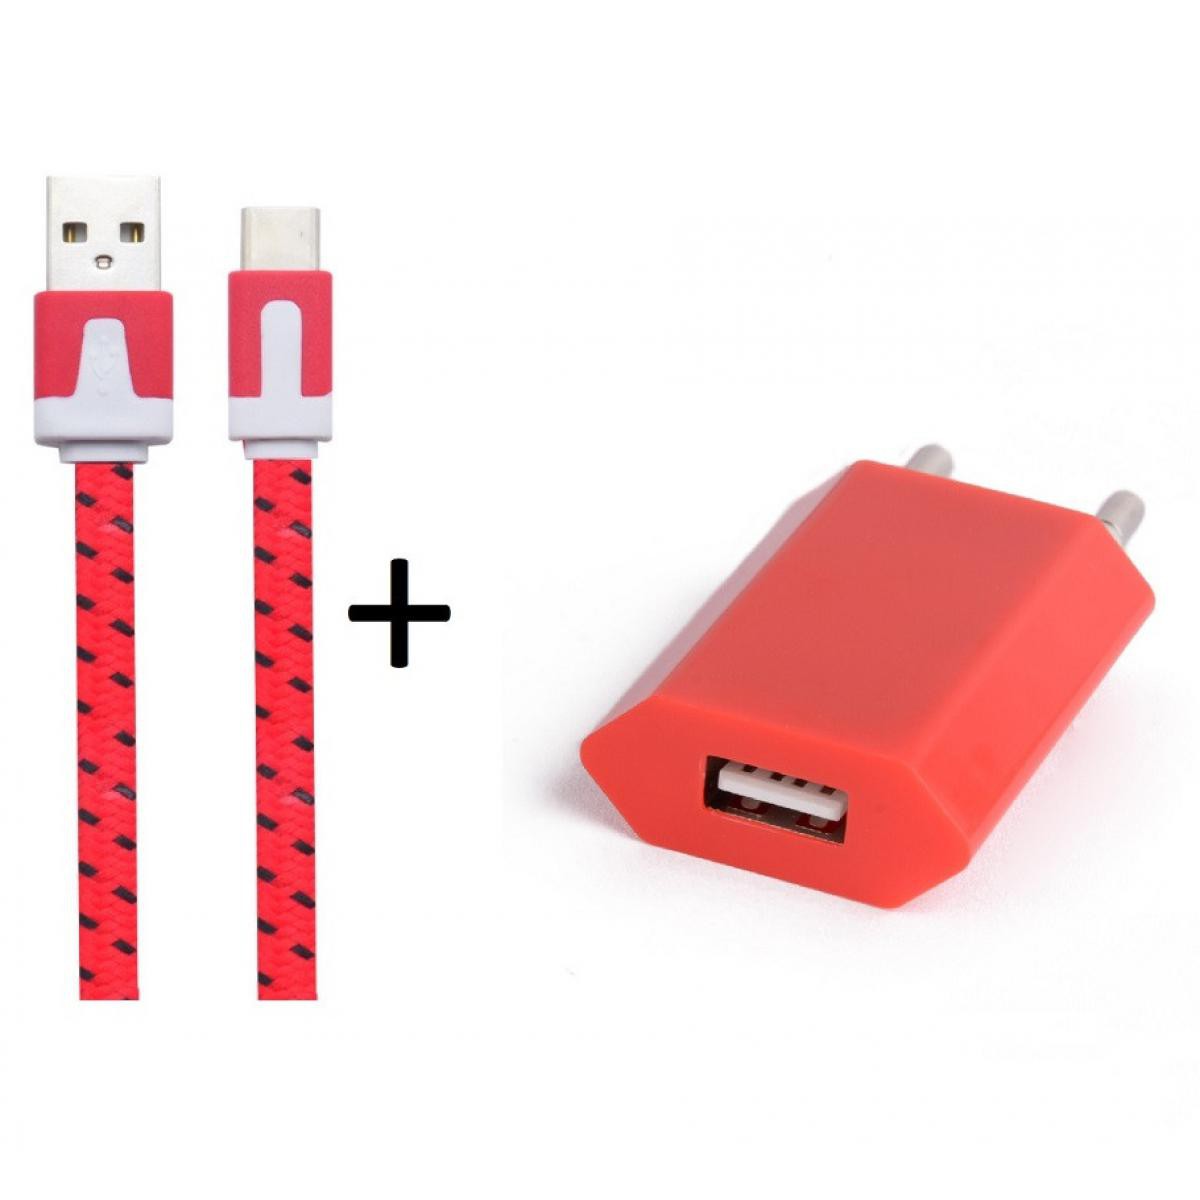 Shot - Pack Chargeur pour SONY Xperia 1 II Smartphone Type C (Cable Noodle 1m Chargeur + Prise Secteur USB) Murale Android (ROUGE) - Chargeur secteur téléphone